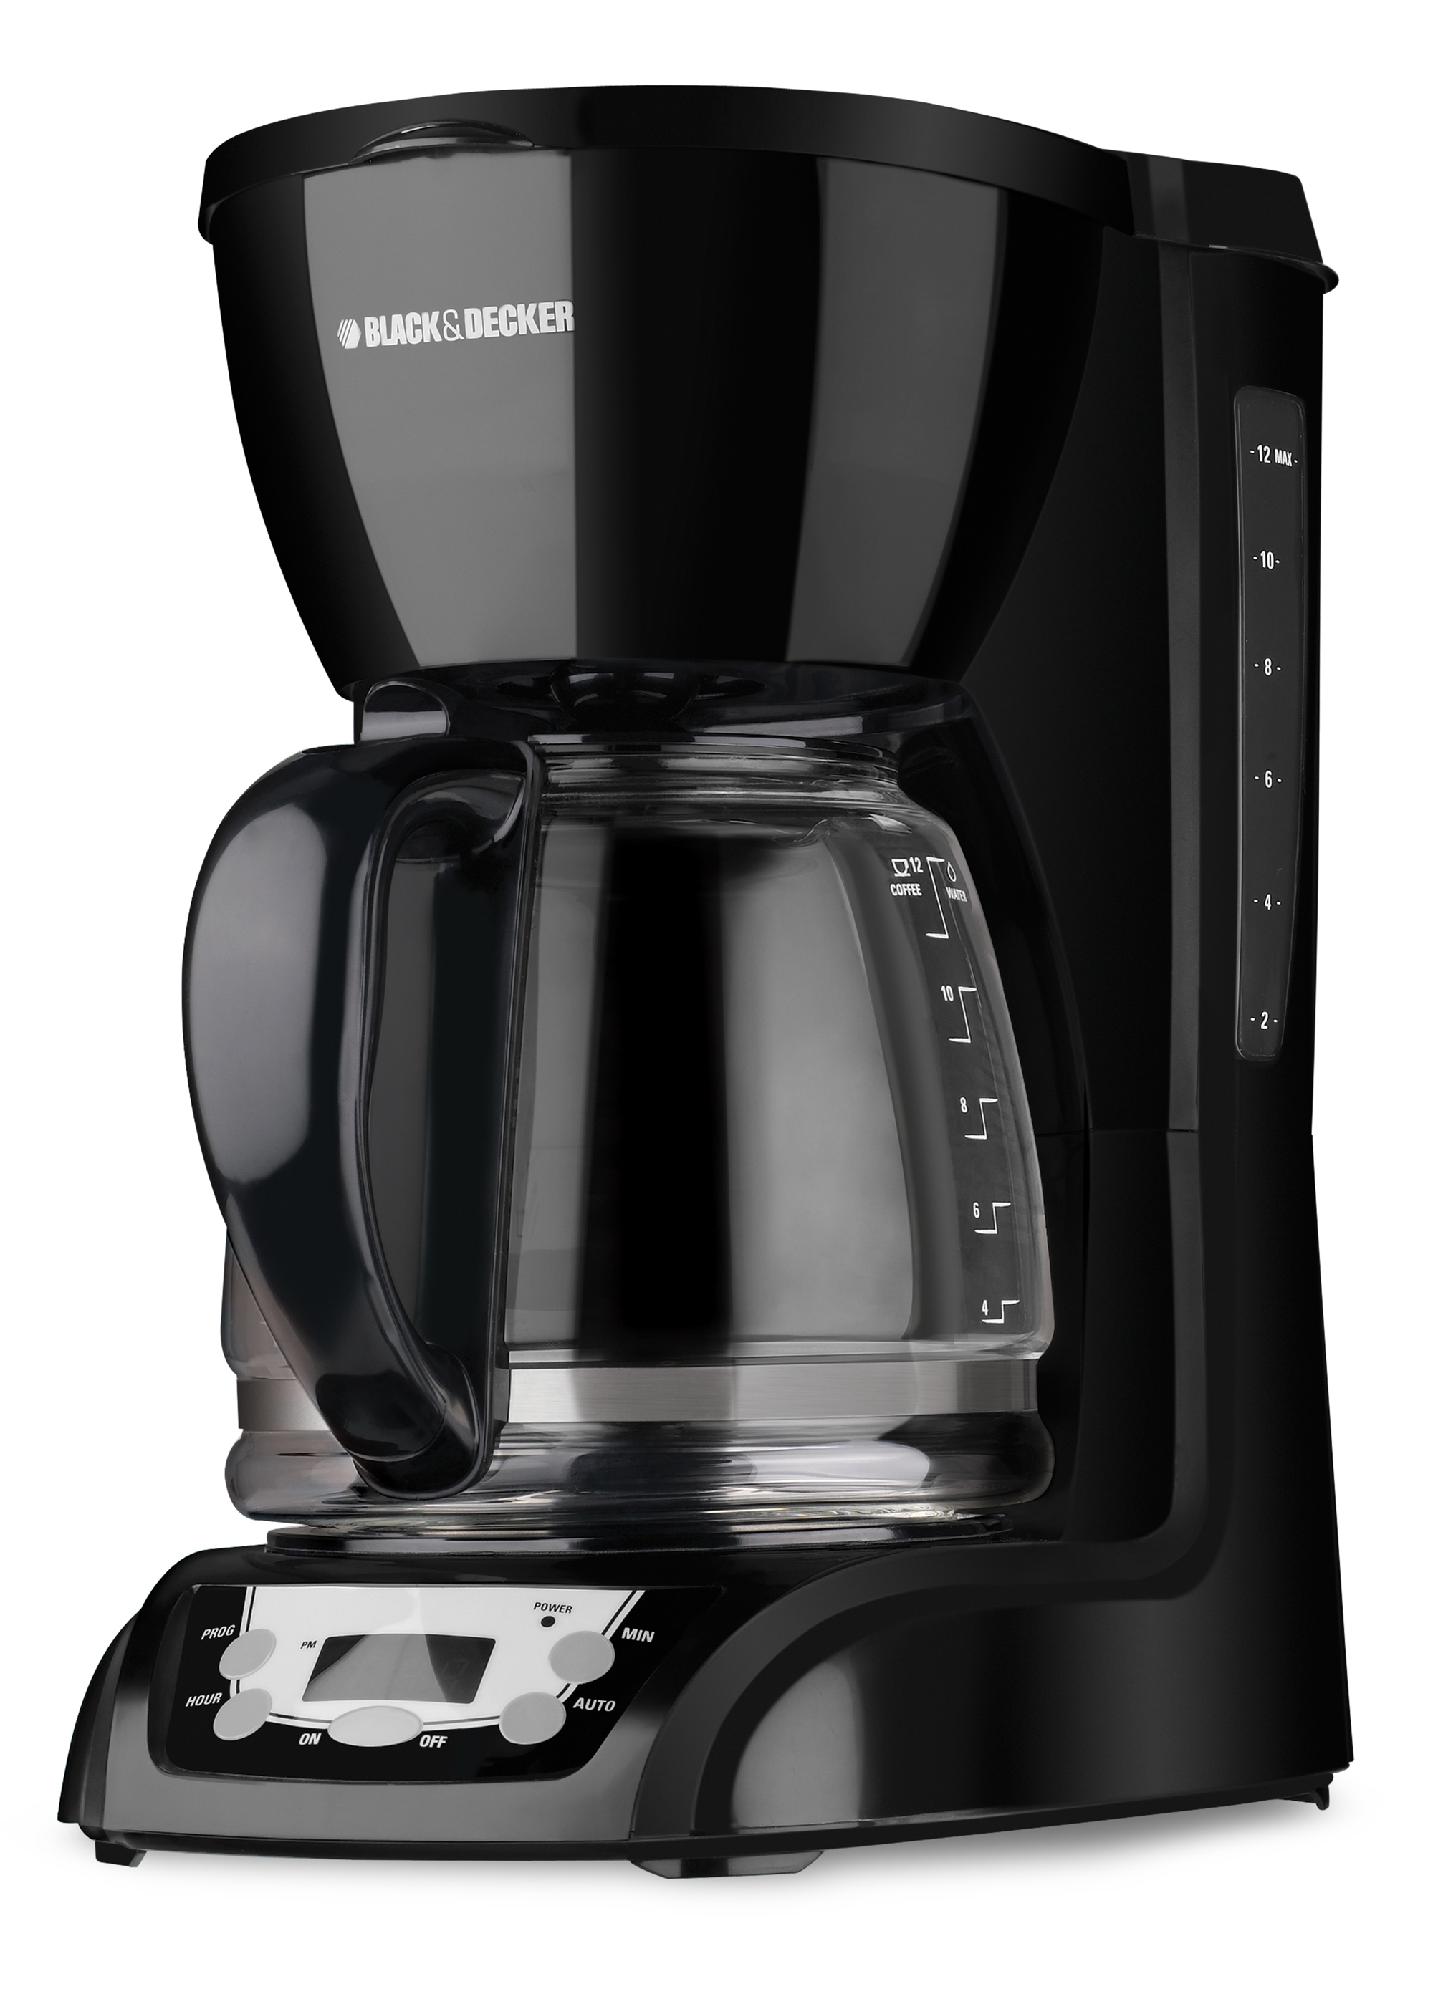 BLACK+DECKER DLX1050B 12-Cup Programmable Coffee Maker